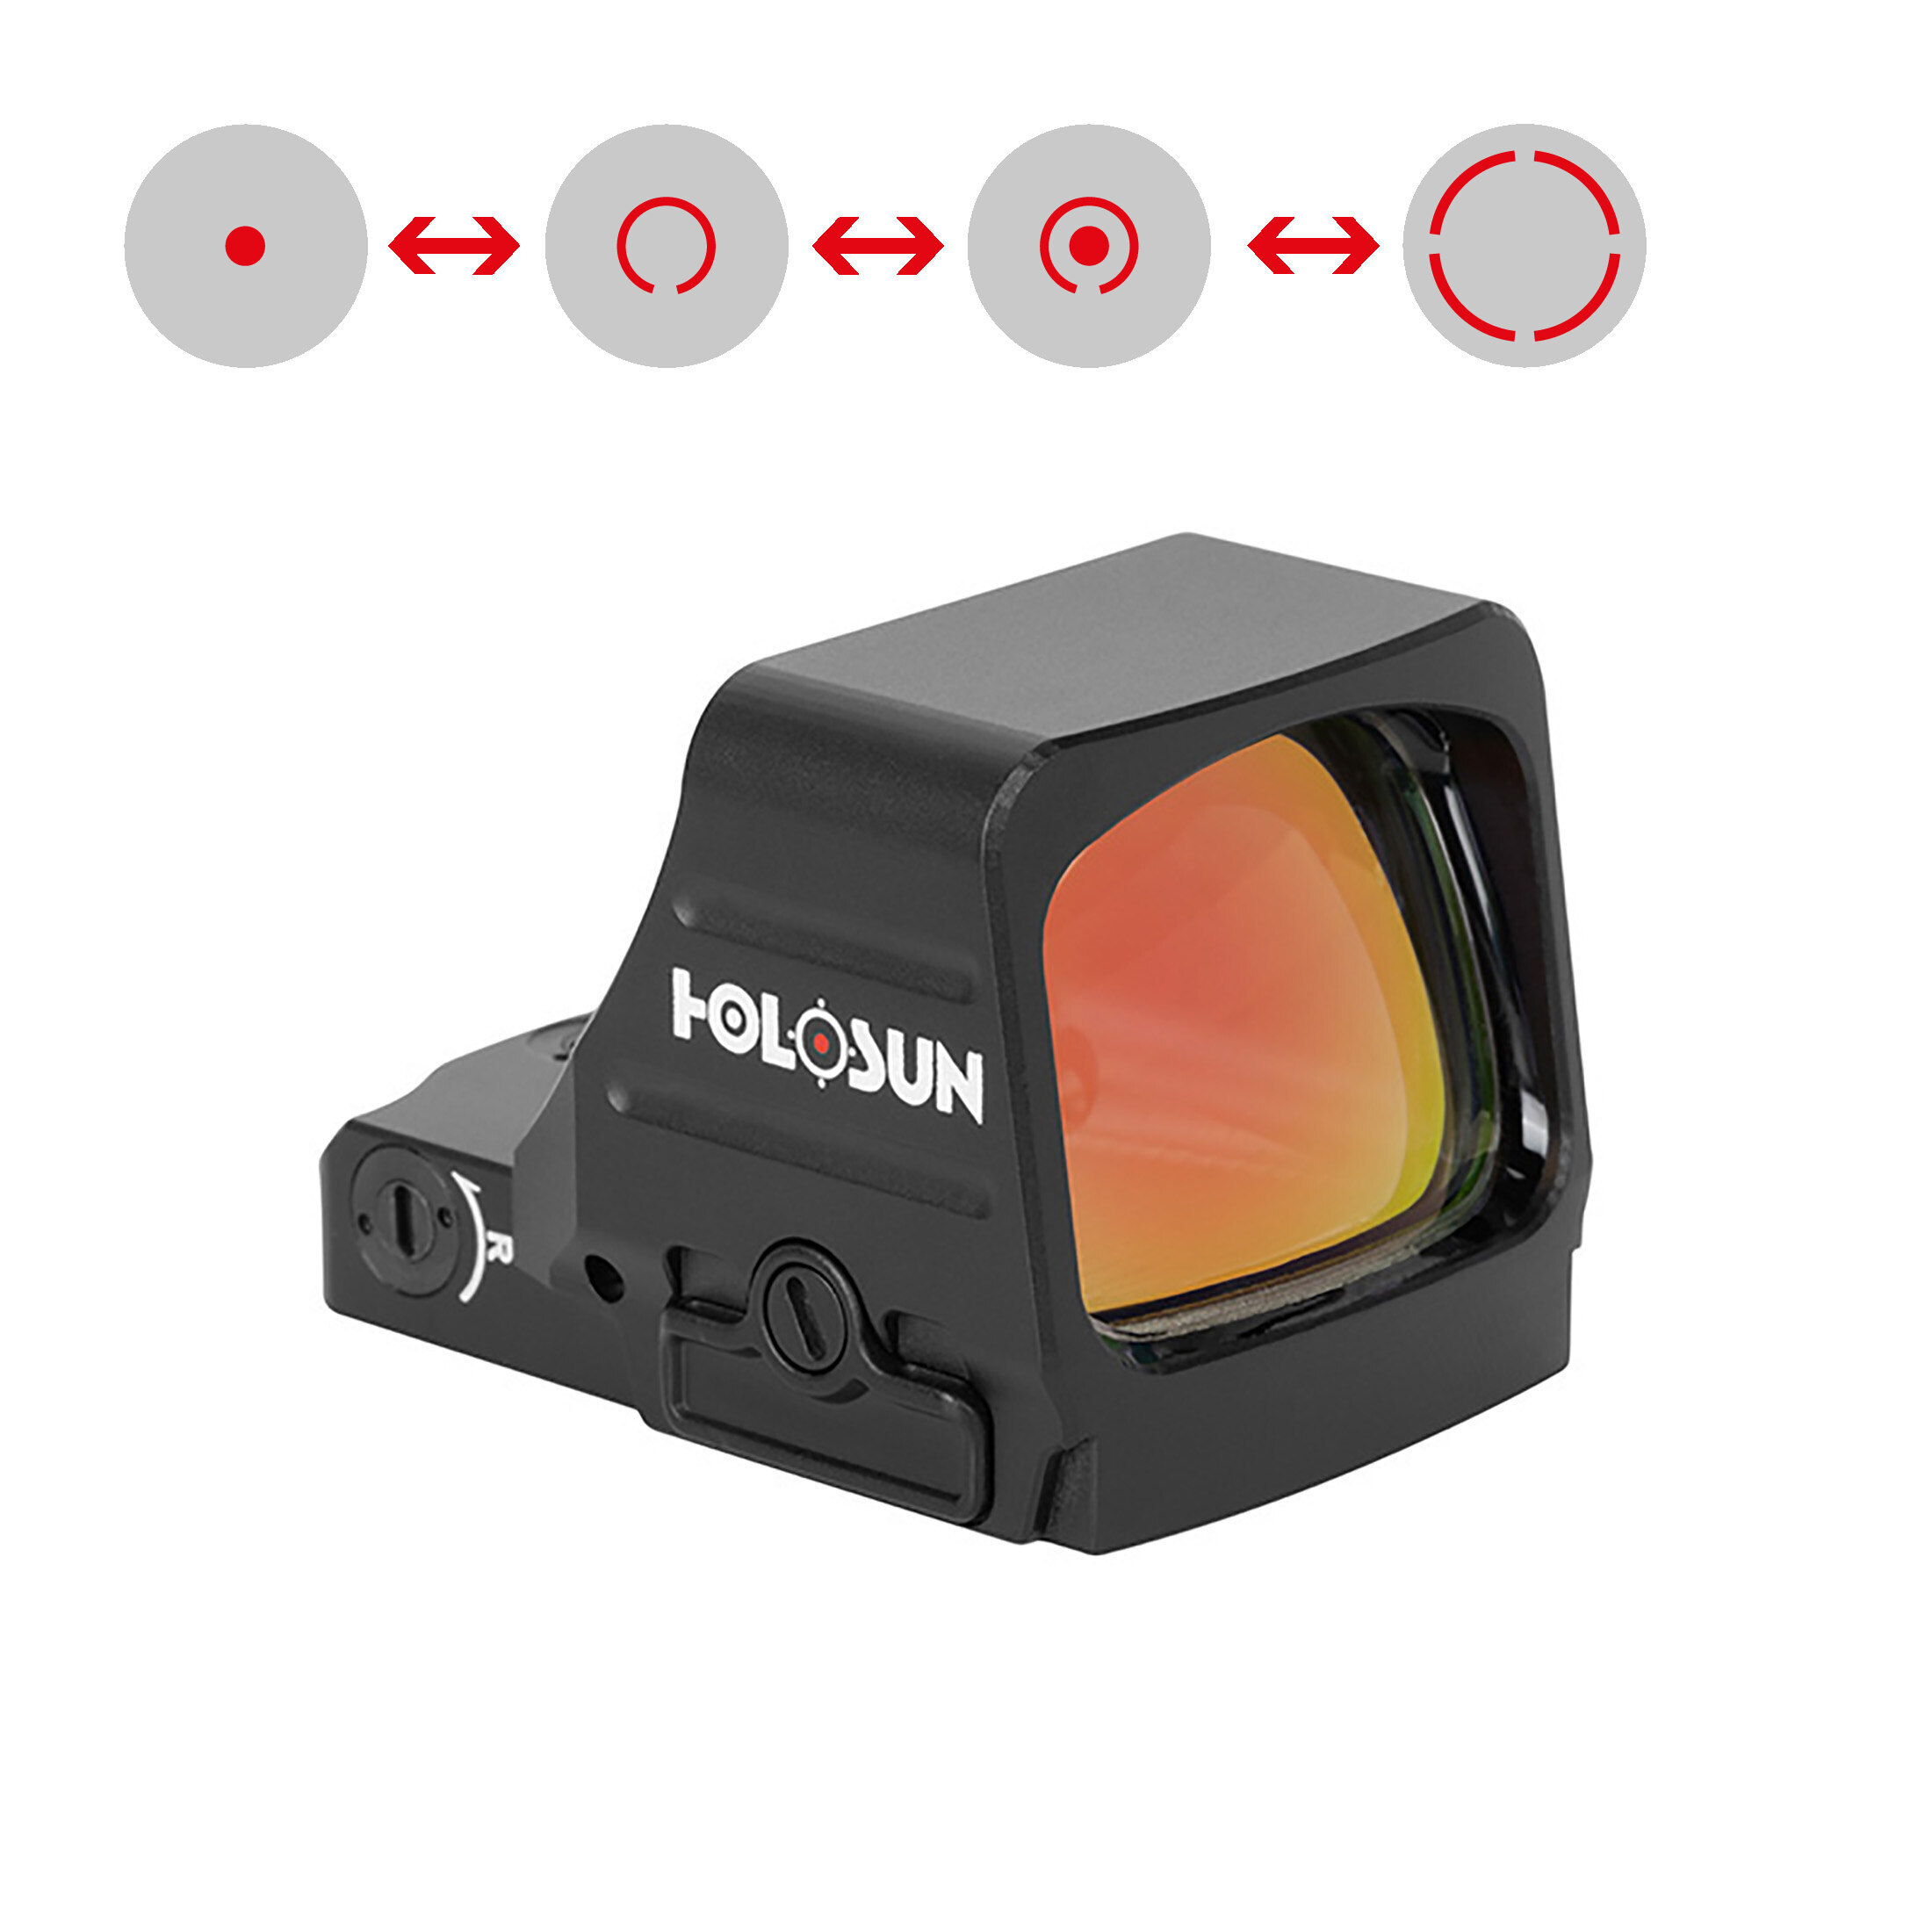 Holosun HS507COMP open reflex red dot sight switchable 2MOA dot, 8/20/32MOA circle dot reticle, bla…